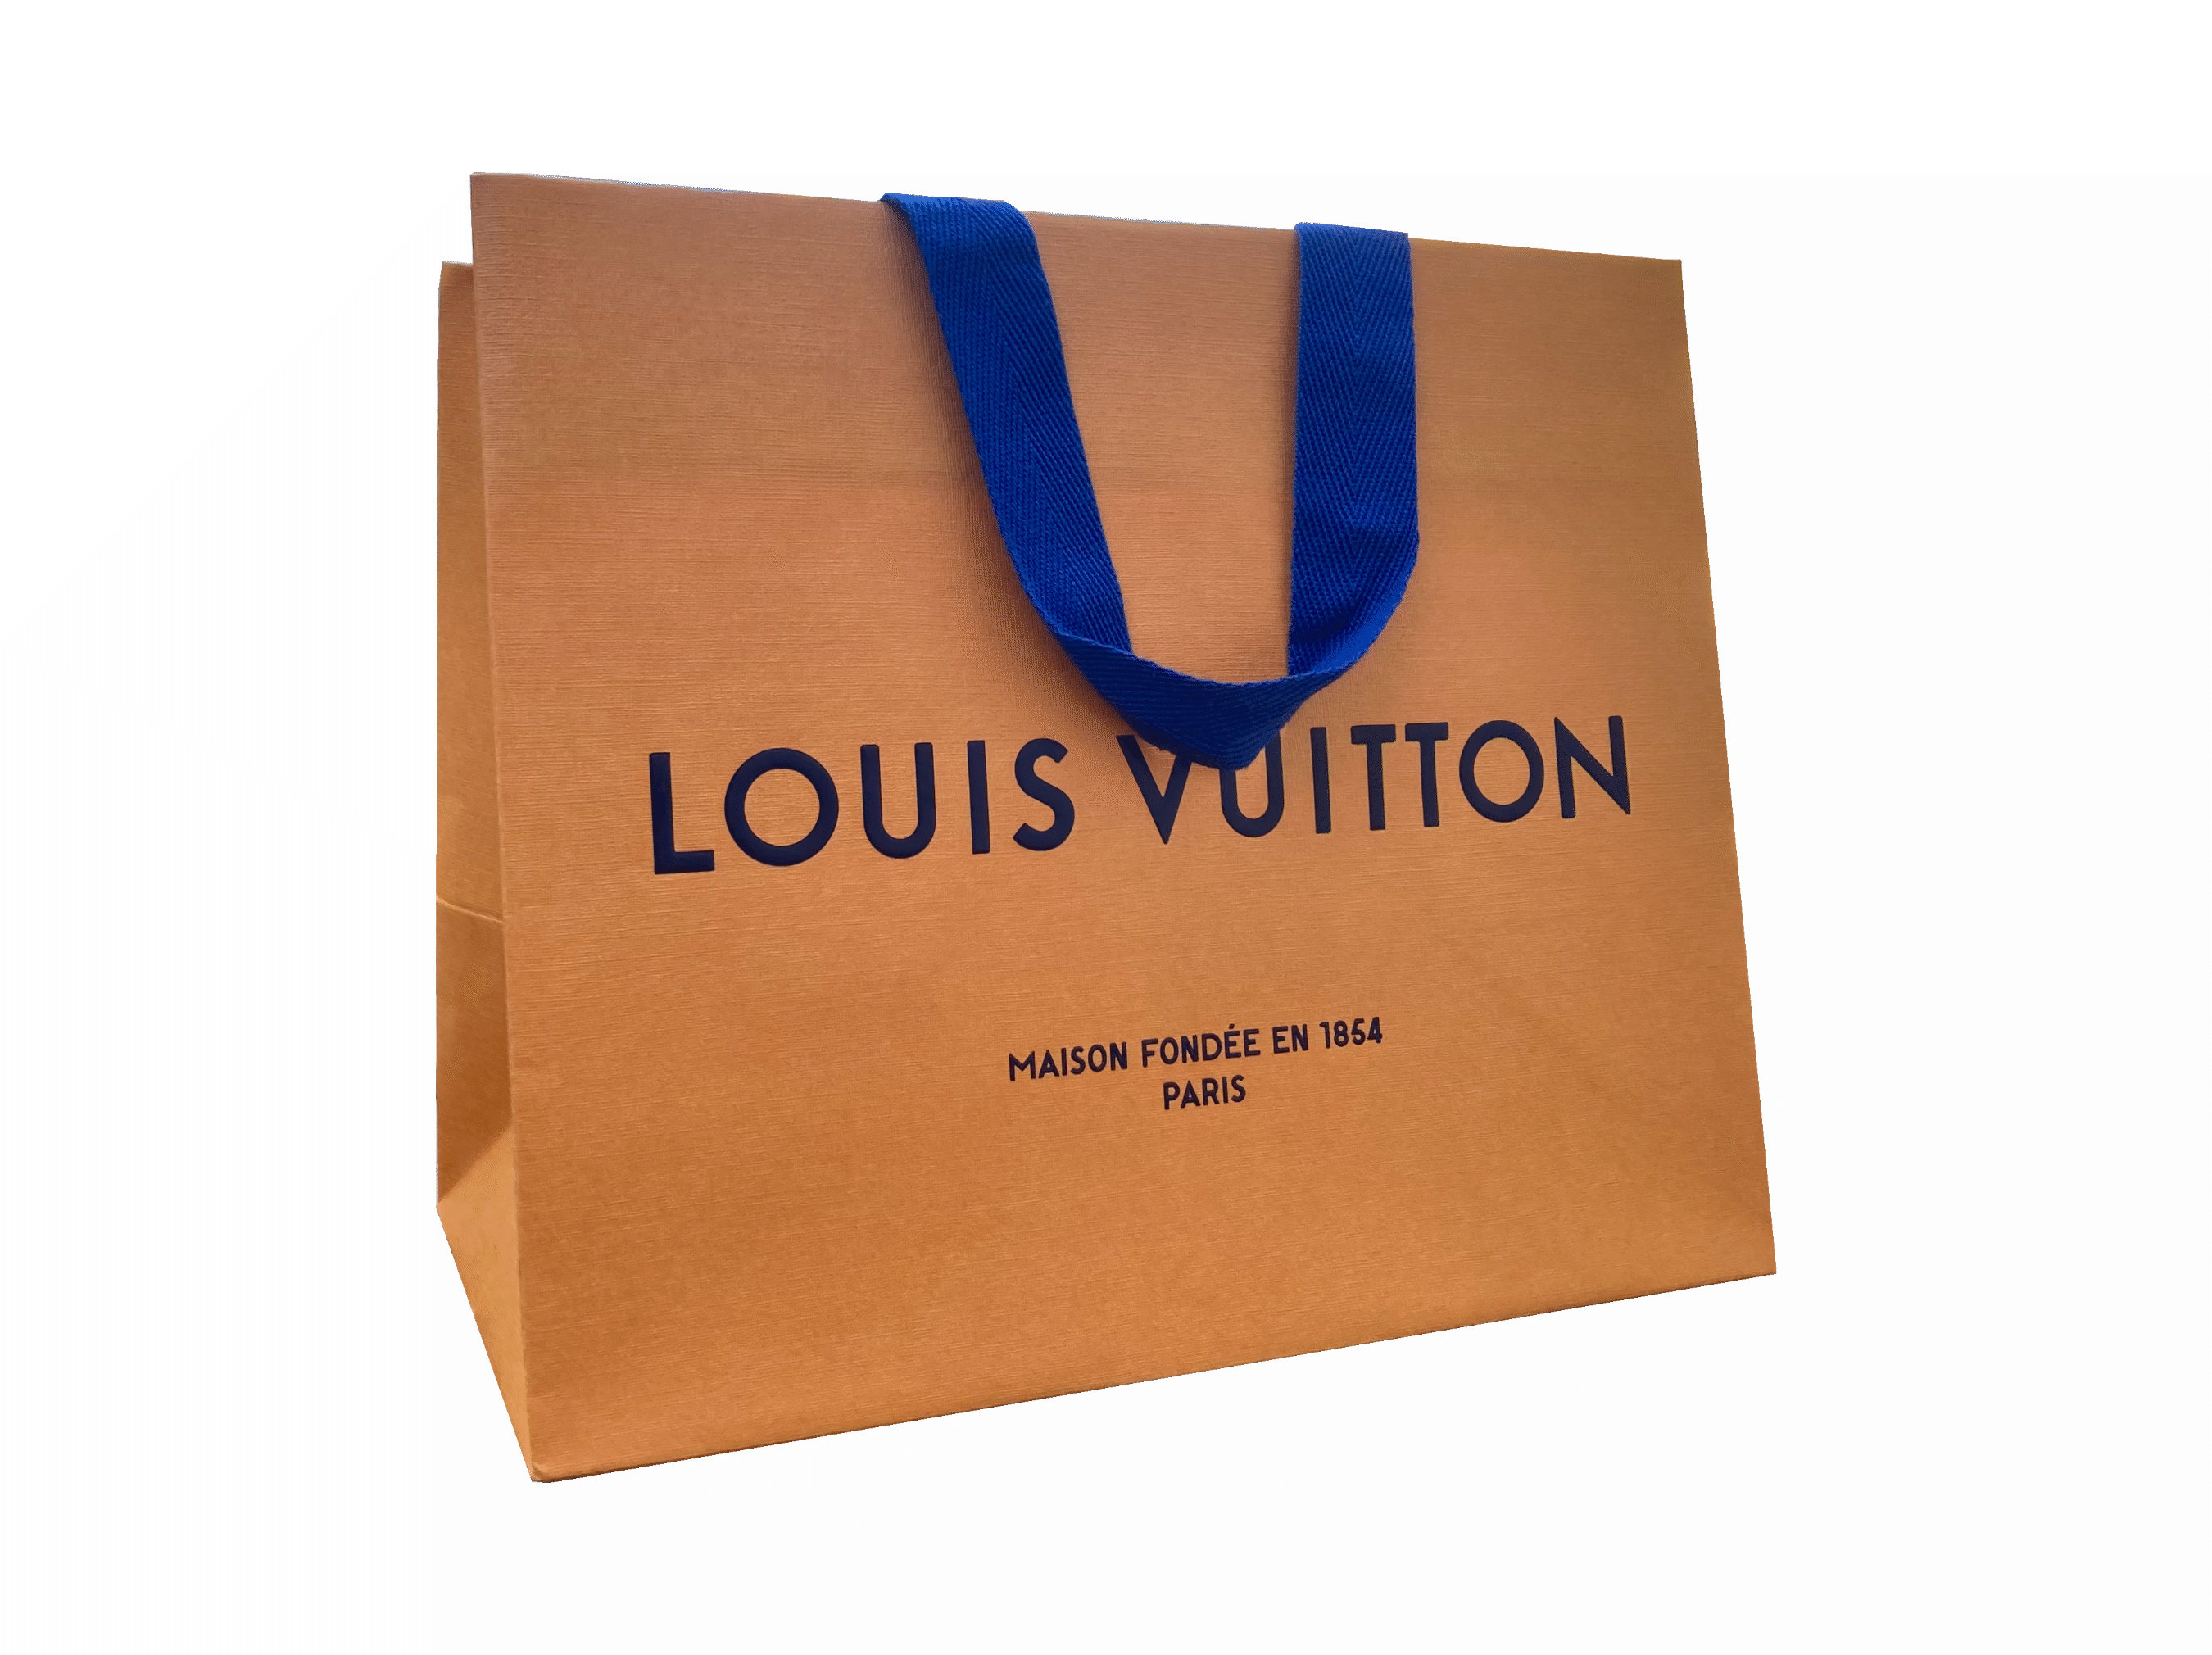 Louis vuitton packaging -  France